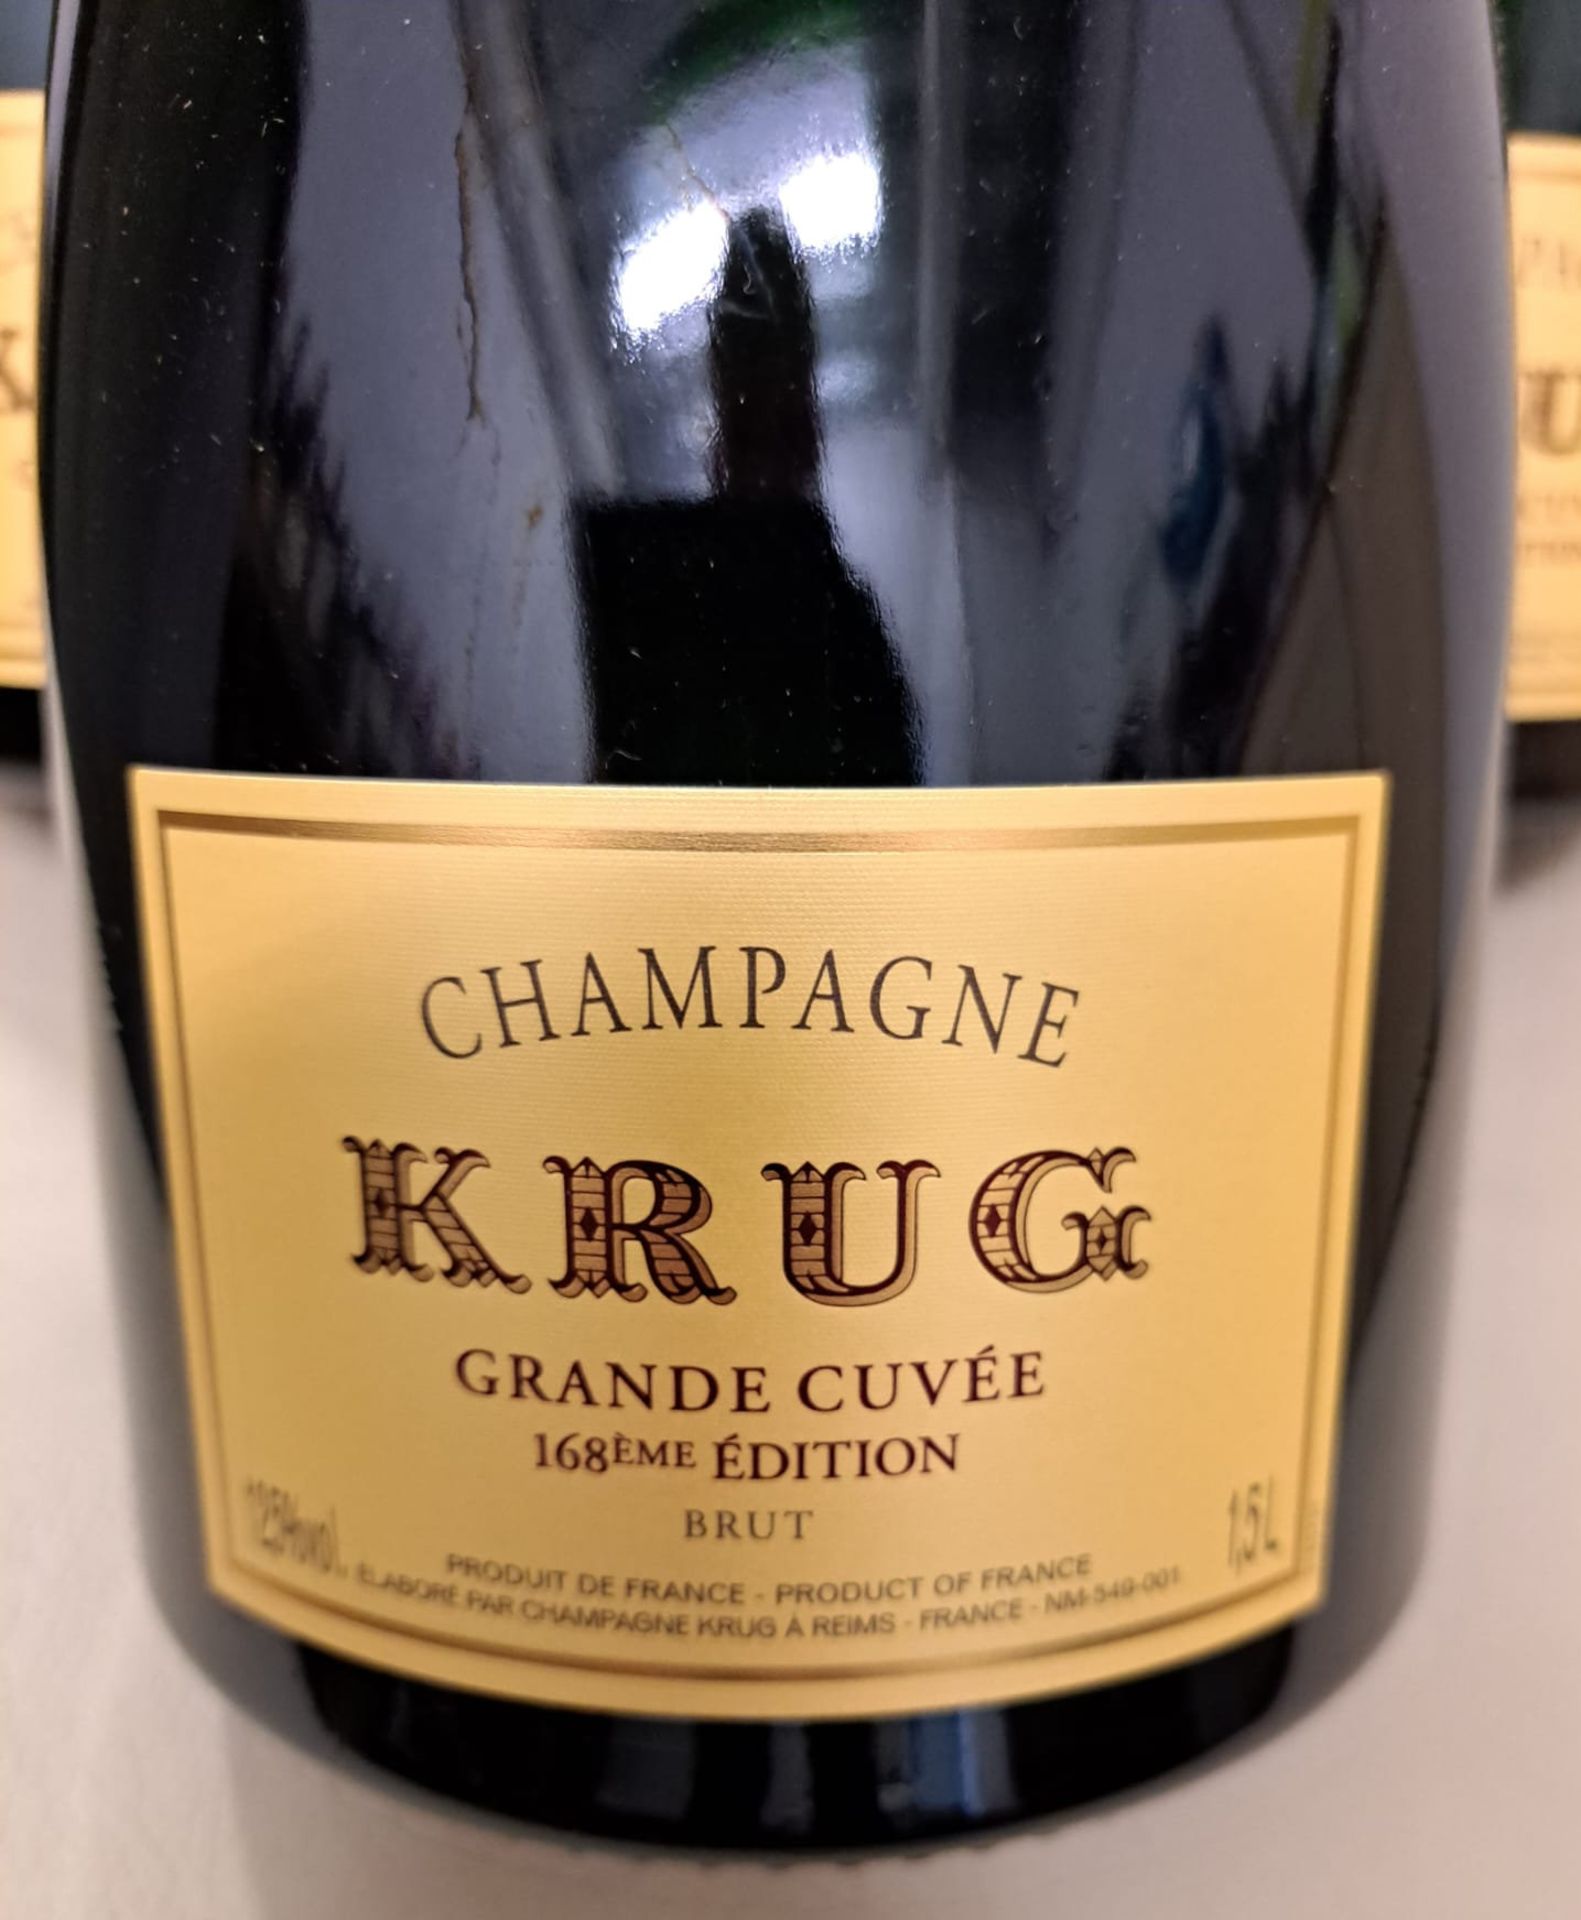 1 x Magnum of Krug Champagne Grande Cuvee 168Eme Edition Brut - Retail Price £540 - Ref: WAS049B - - Image 2 of 2